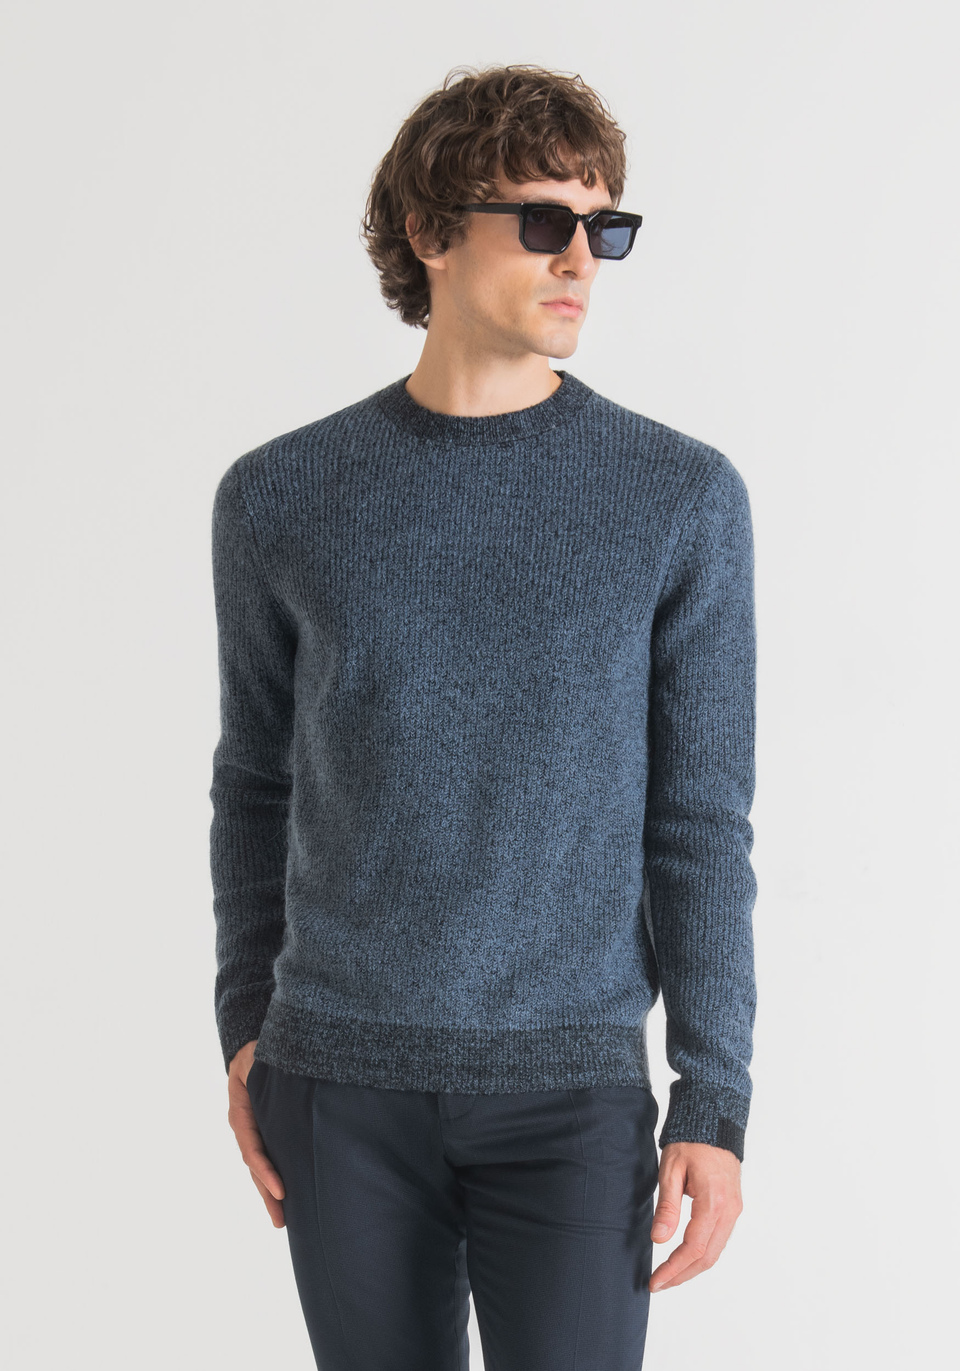 discount 85% MEN FASHION Jumpers & Sweatshirts Knitted Antony Morato jumper Black/Navy Blue L 